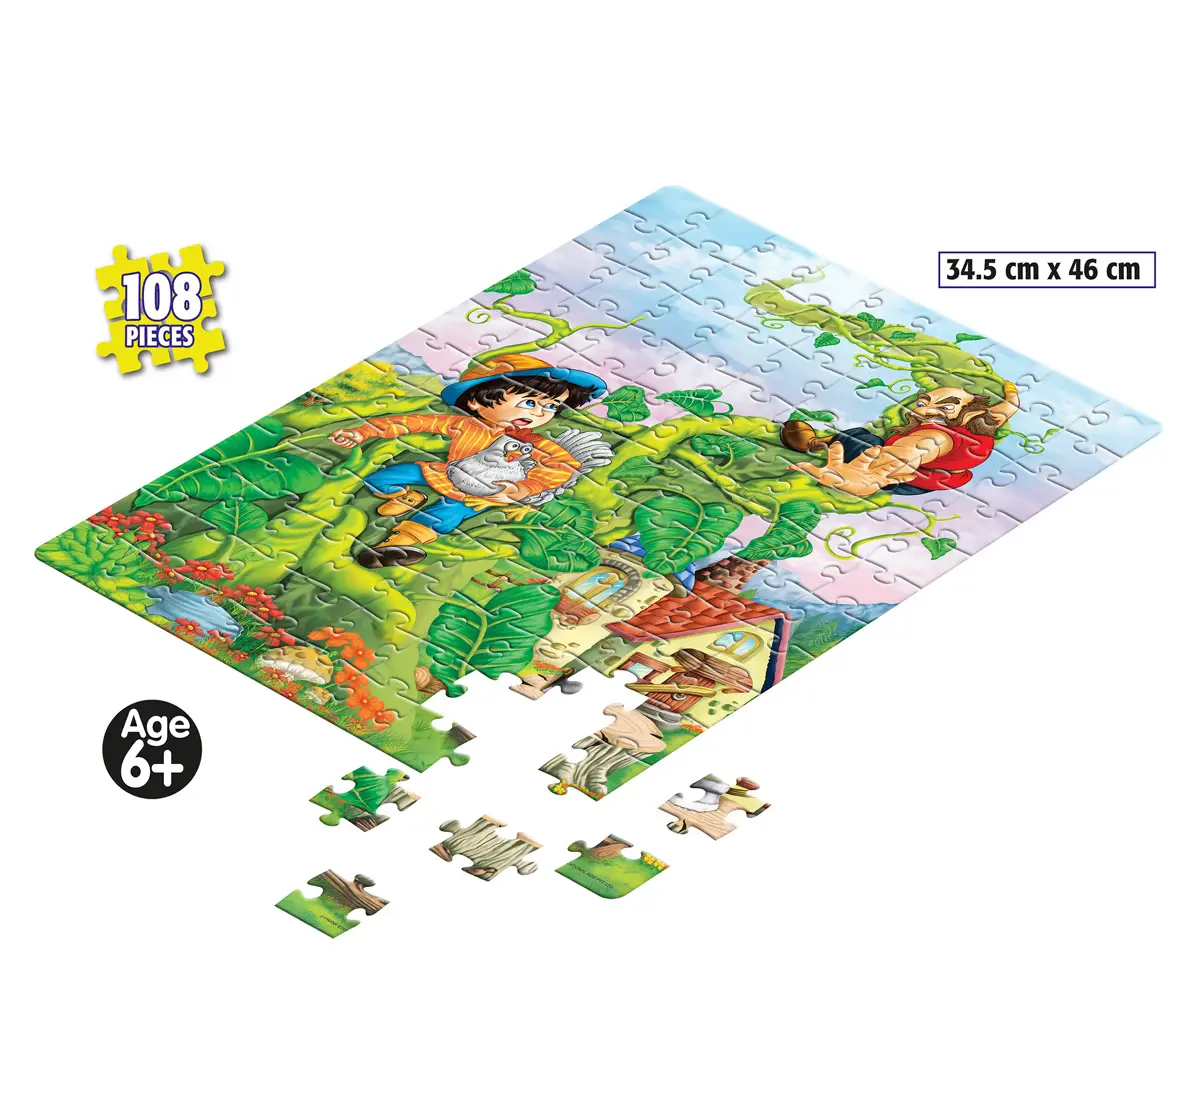 Frank Jack and The Beanstalk Floor Puzzles Multicolor 6Y+